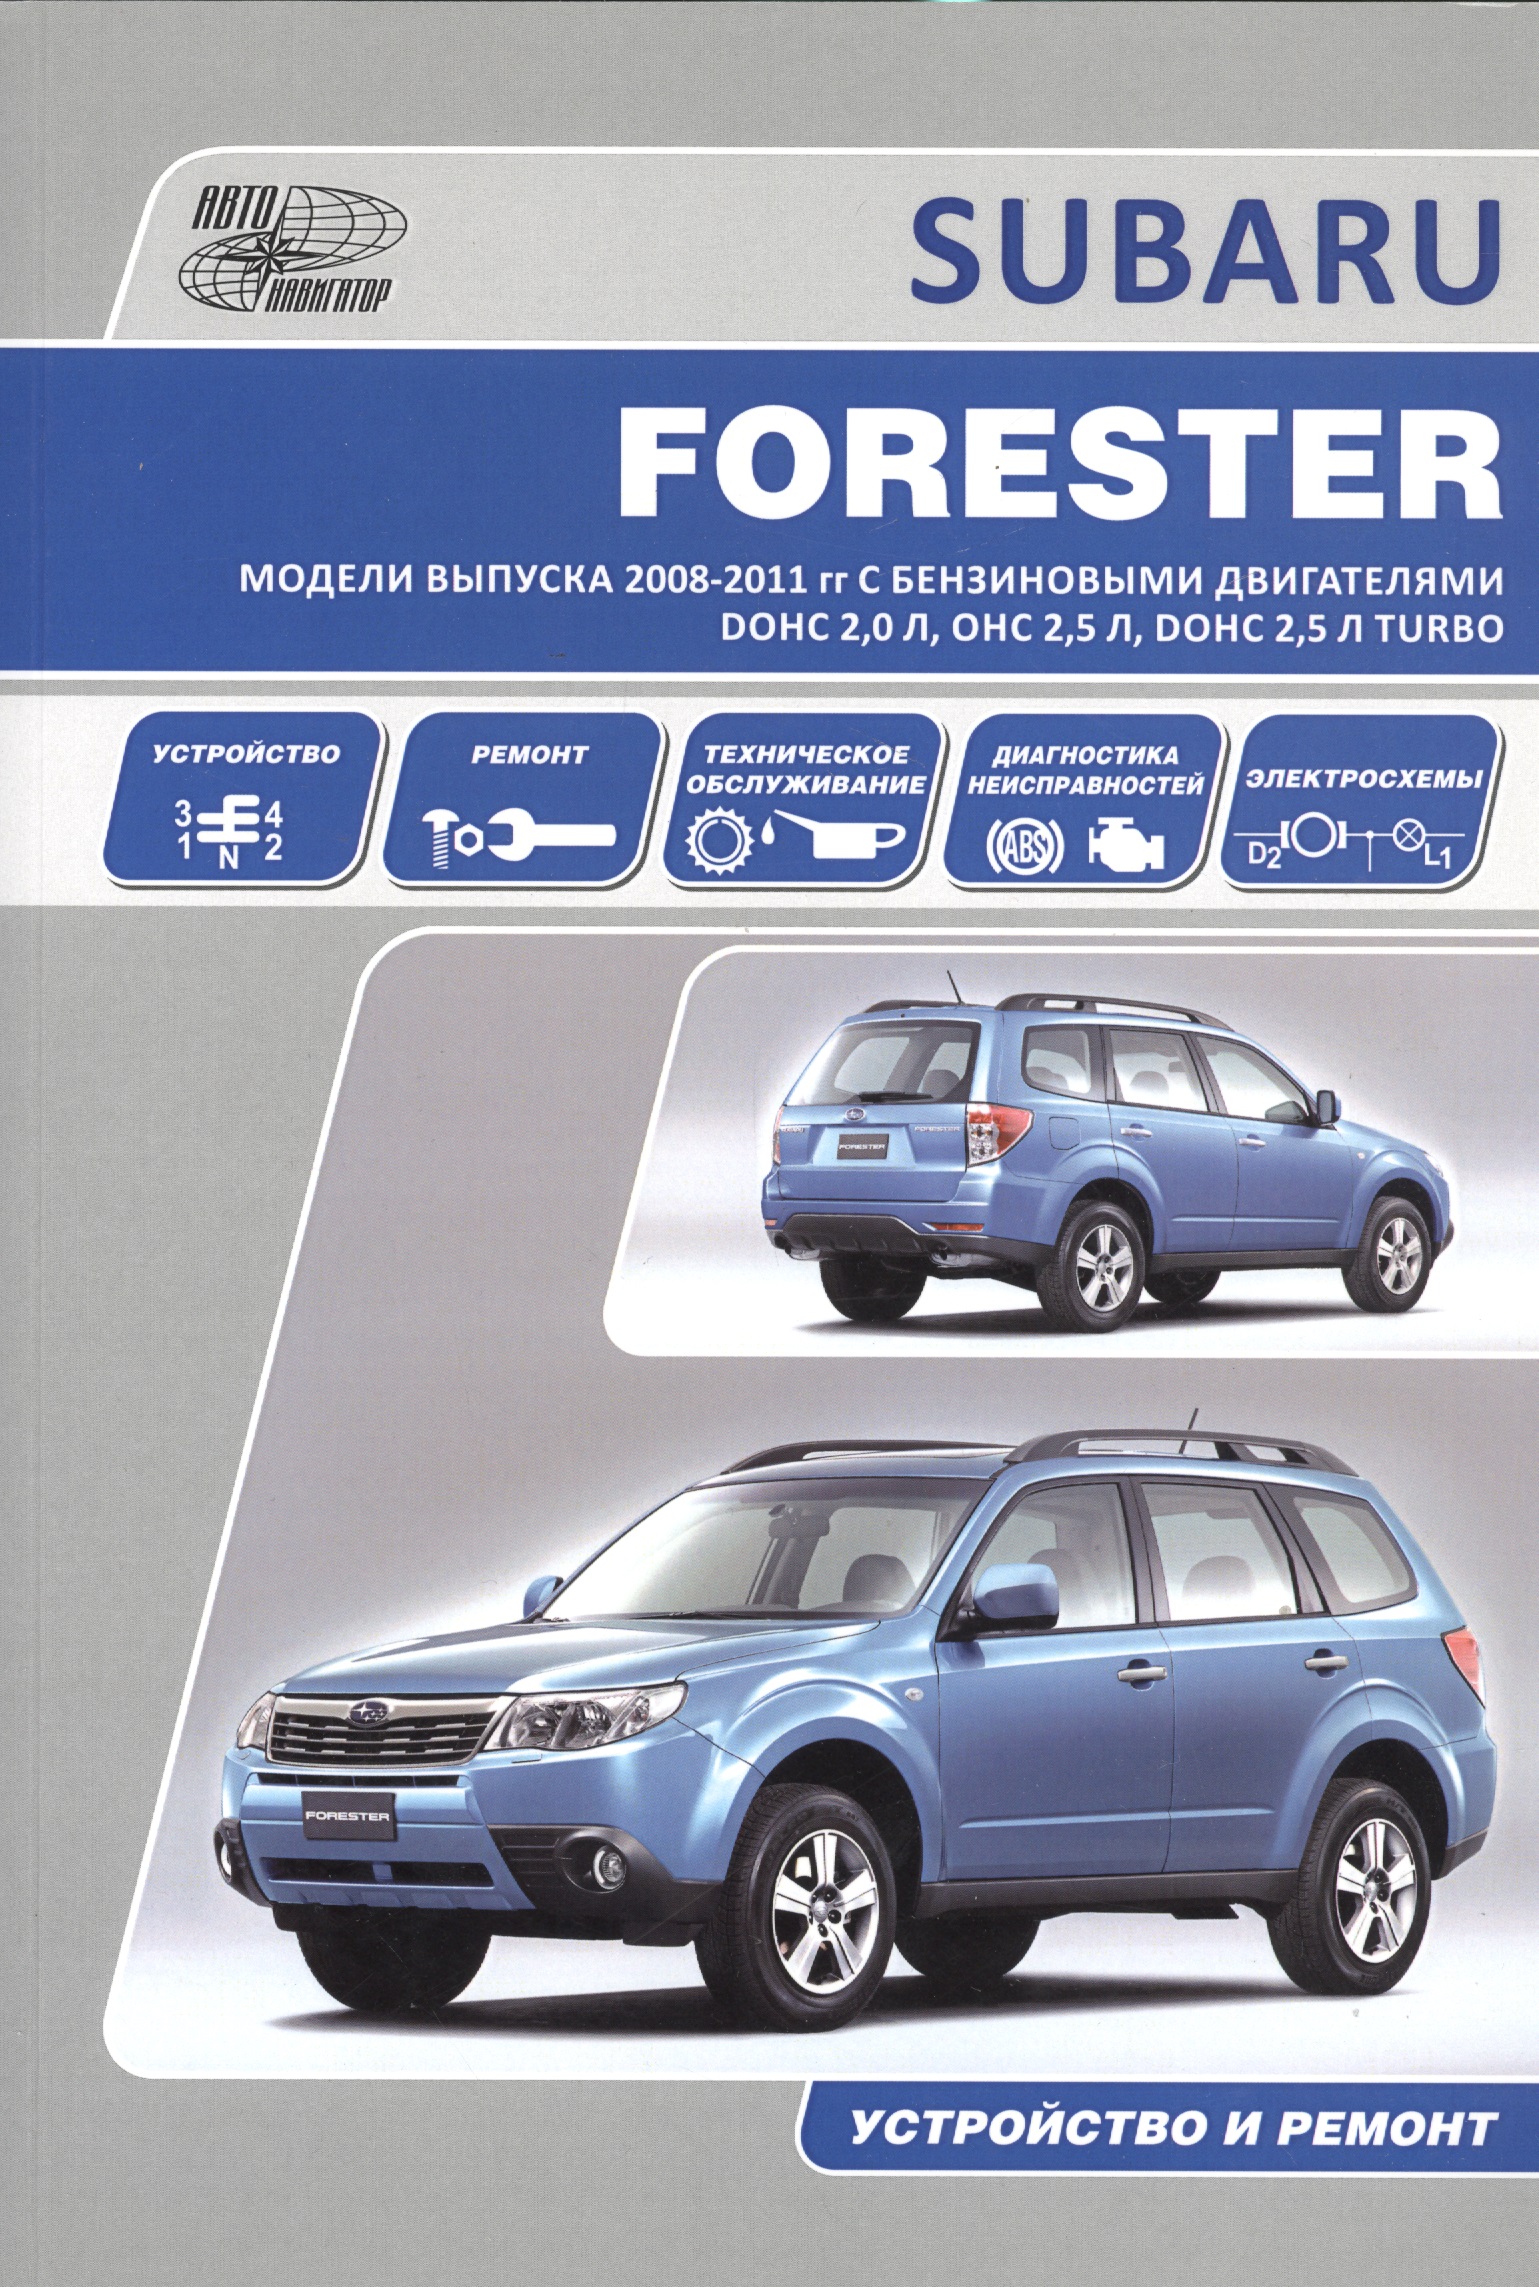 Subaru Forester Мод. вып. 2008-2011 гг. с бенз. двигат. DOHC 2,0 л. (м) subaru forester модели sg выпуска 2012 2016 гг с бензиновыми двигателями fb20b 2 0 donc fa20f 2 0 donc turbo fb25b 2 5 donc устройство тех